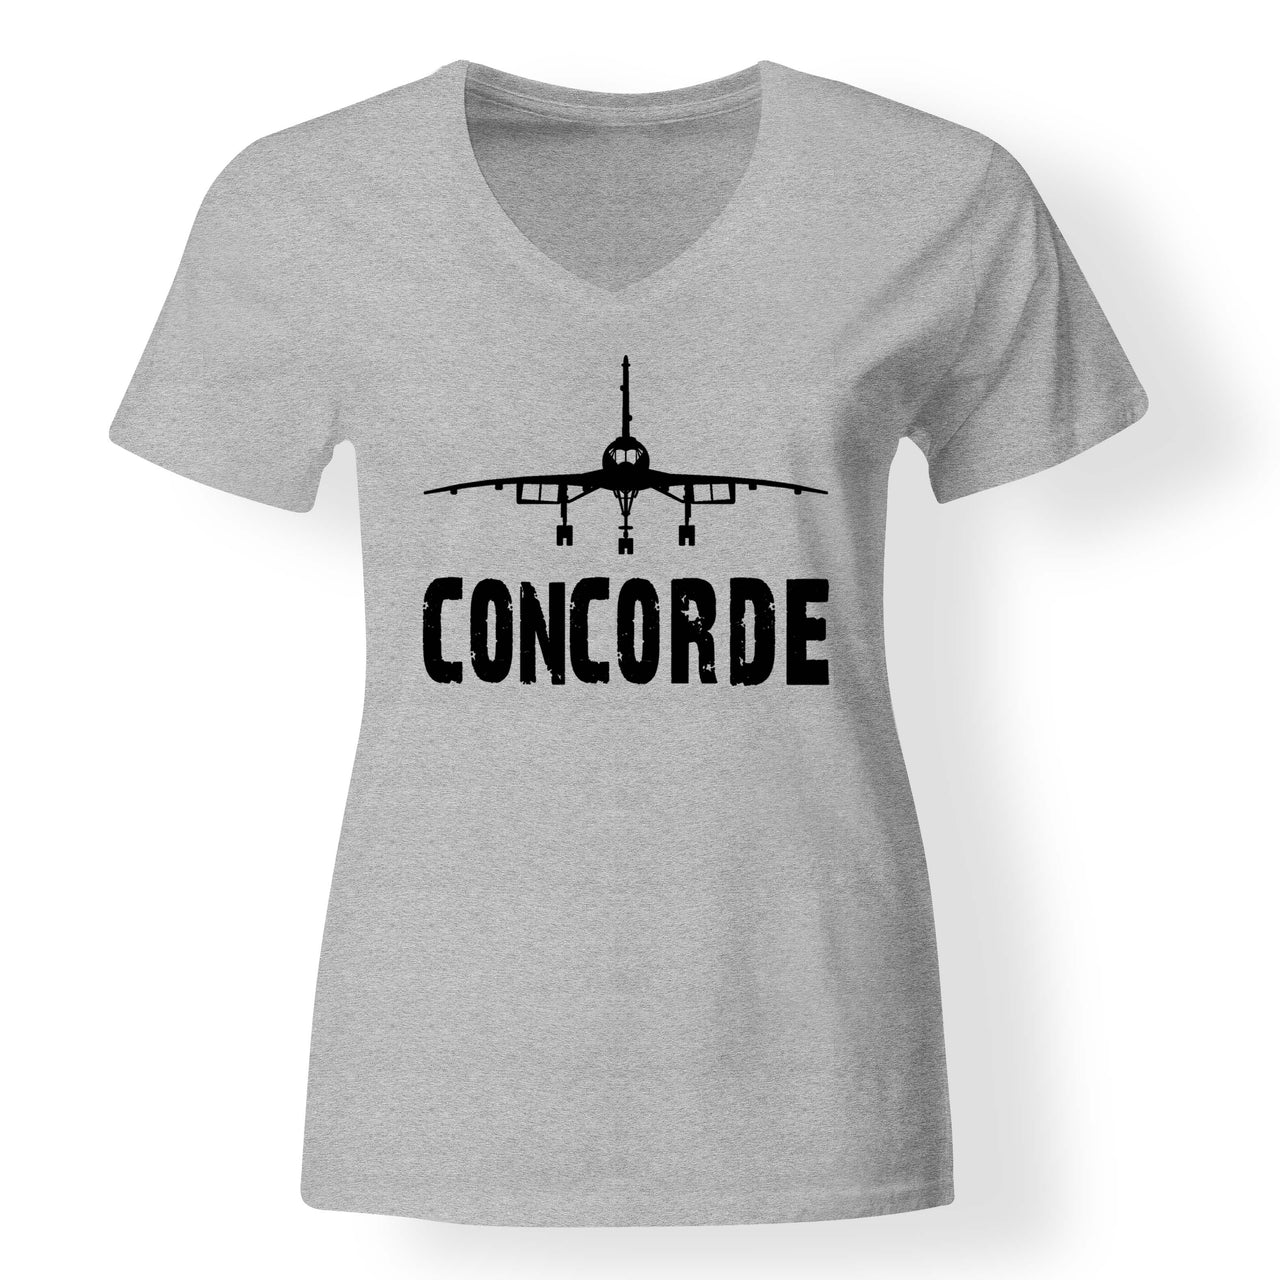 Concorde & Plane Designed V-Neck T-Shirts